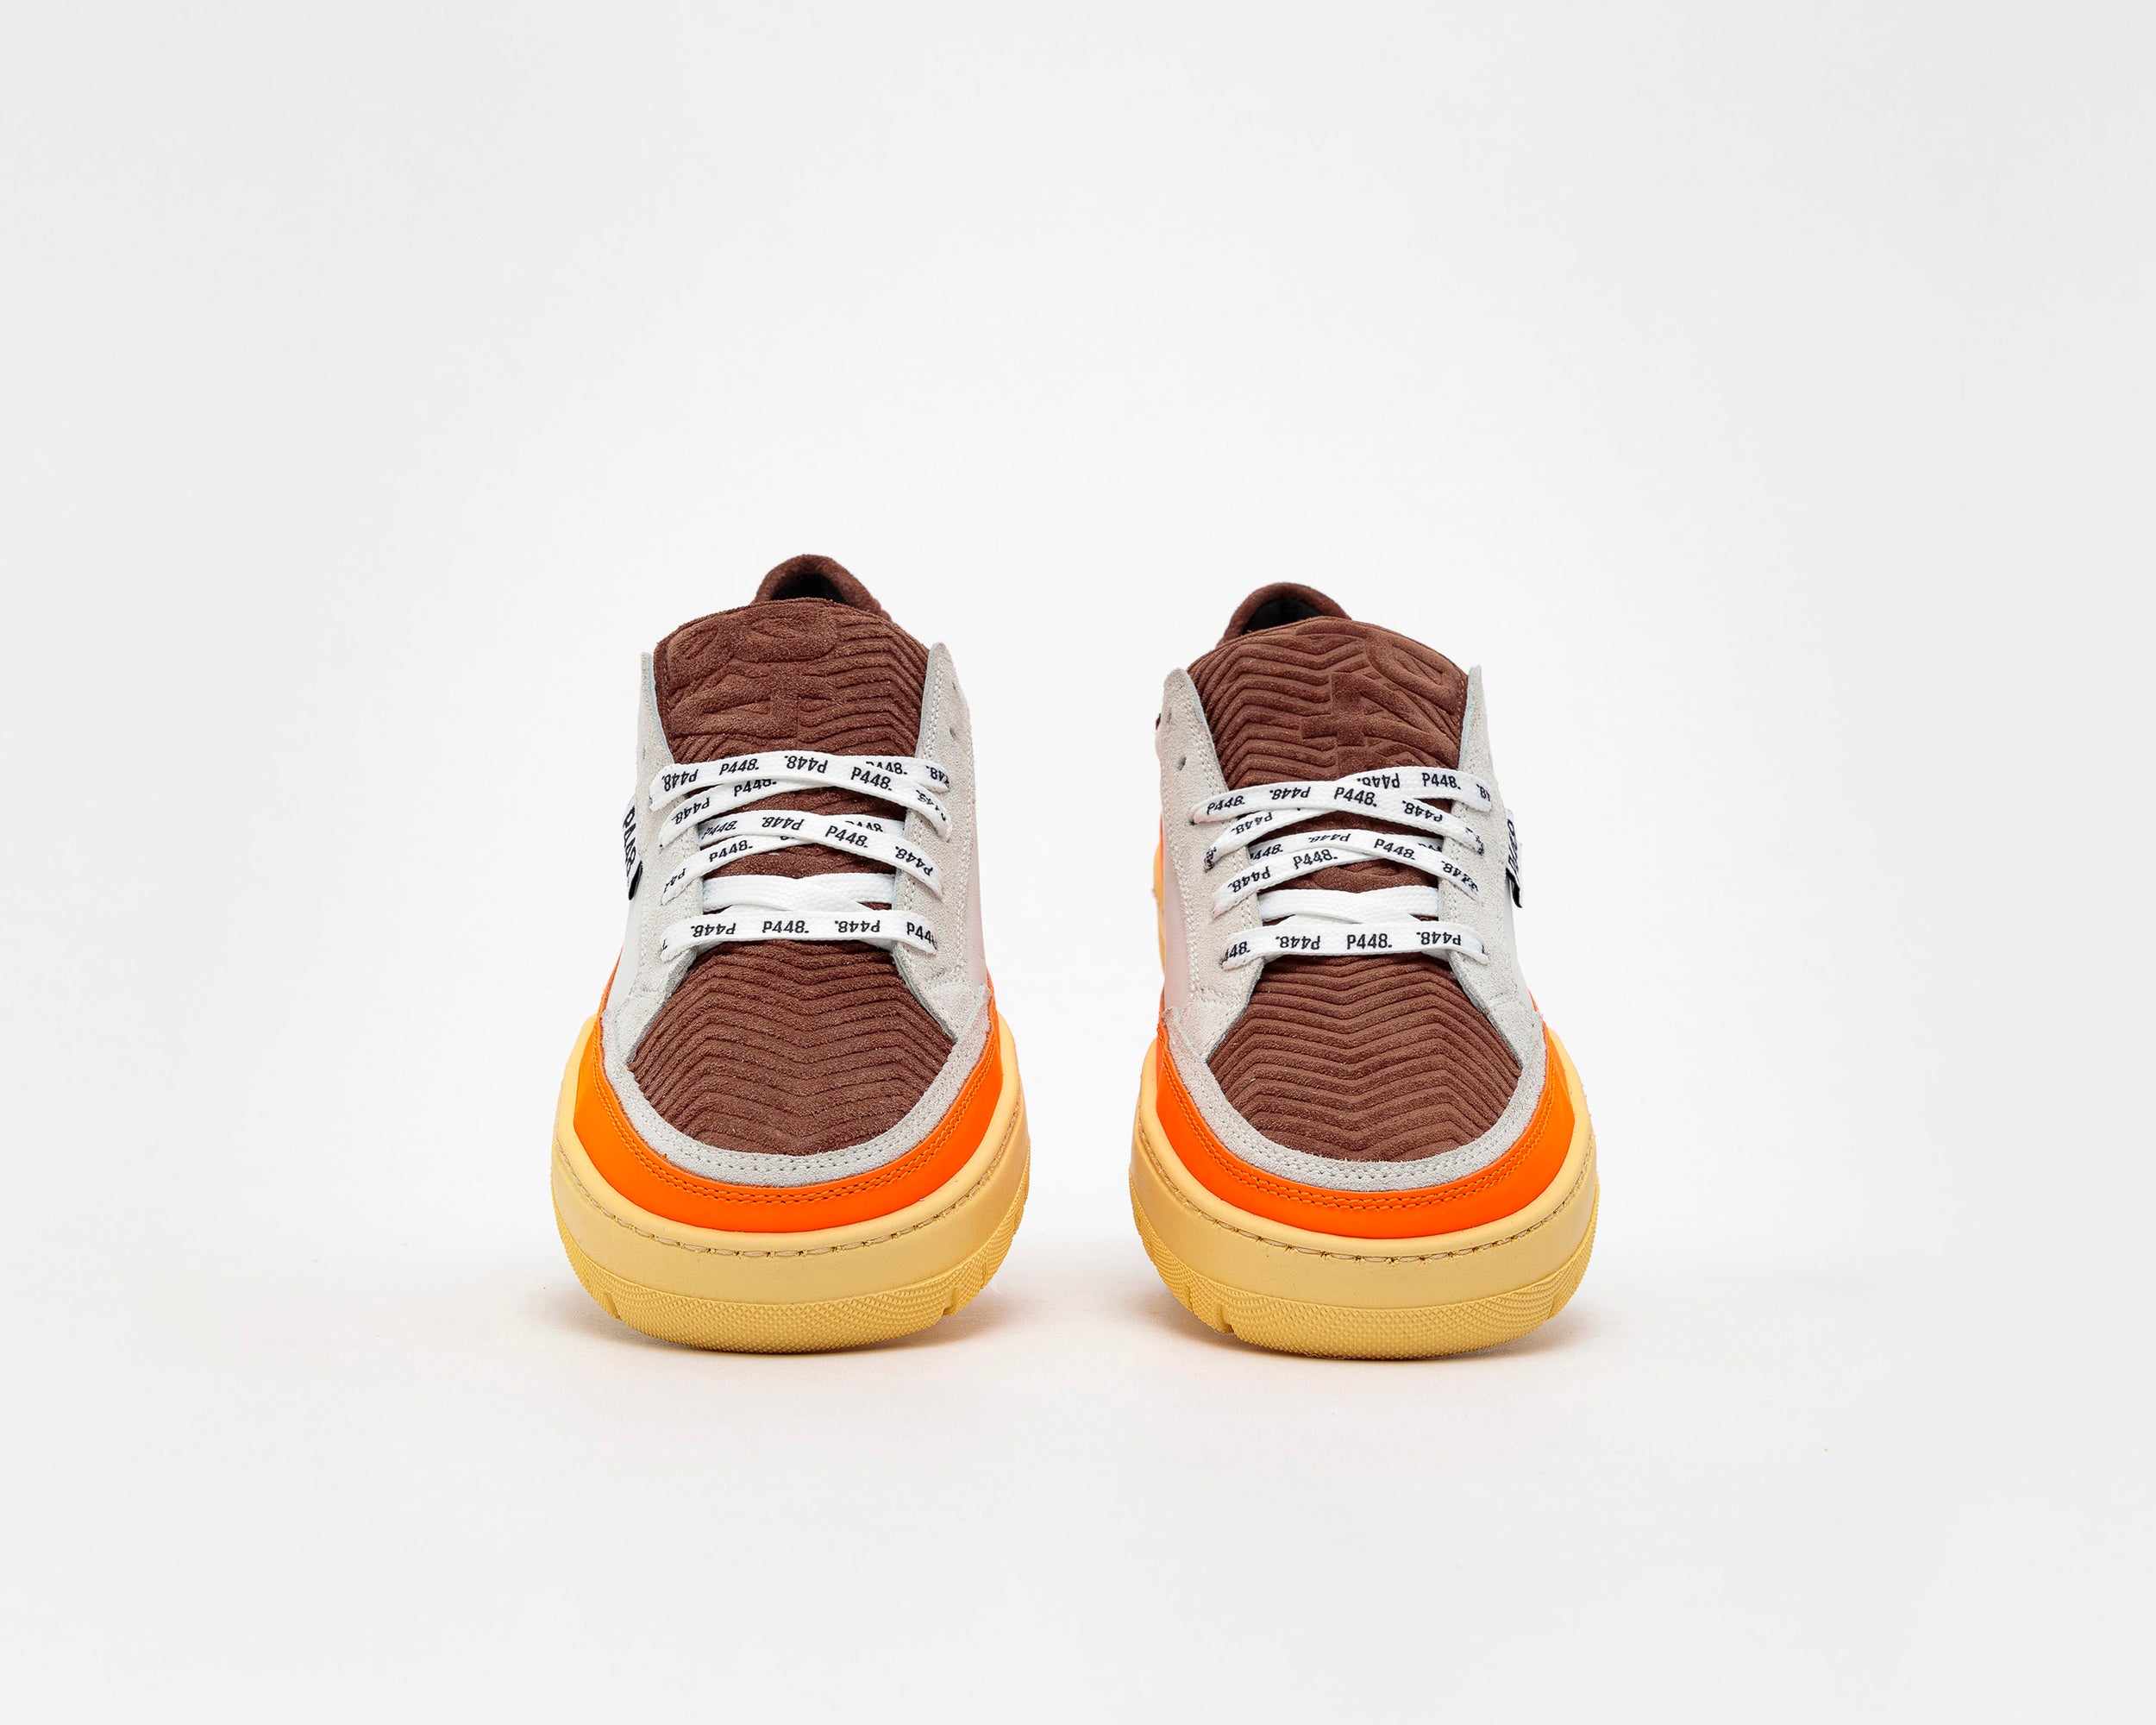 Jack Orange Sneaker – P448